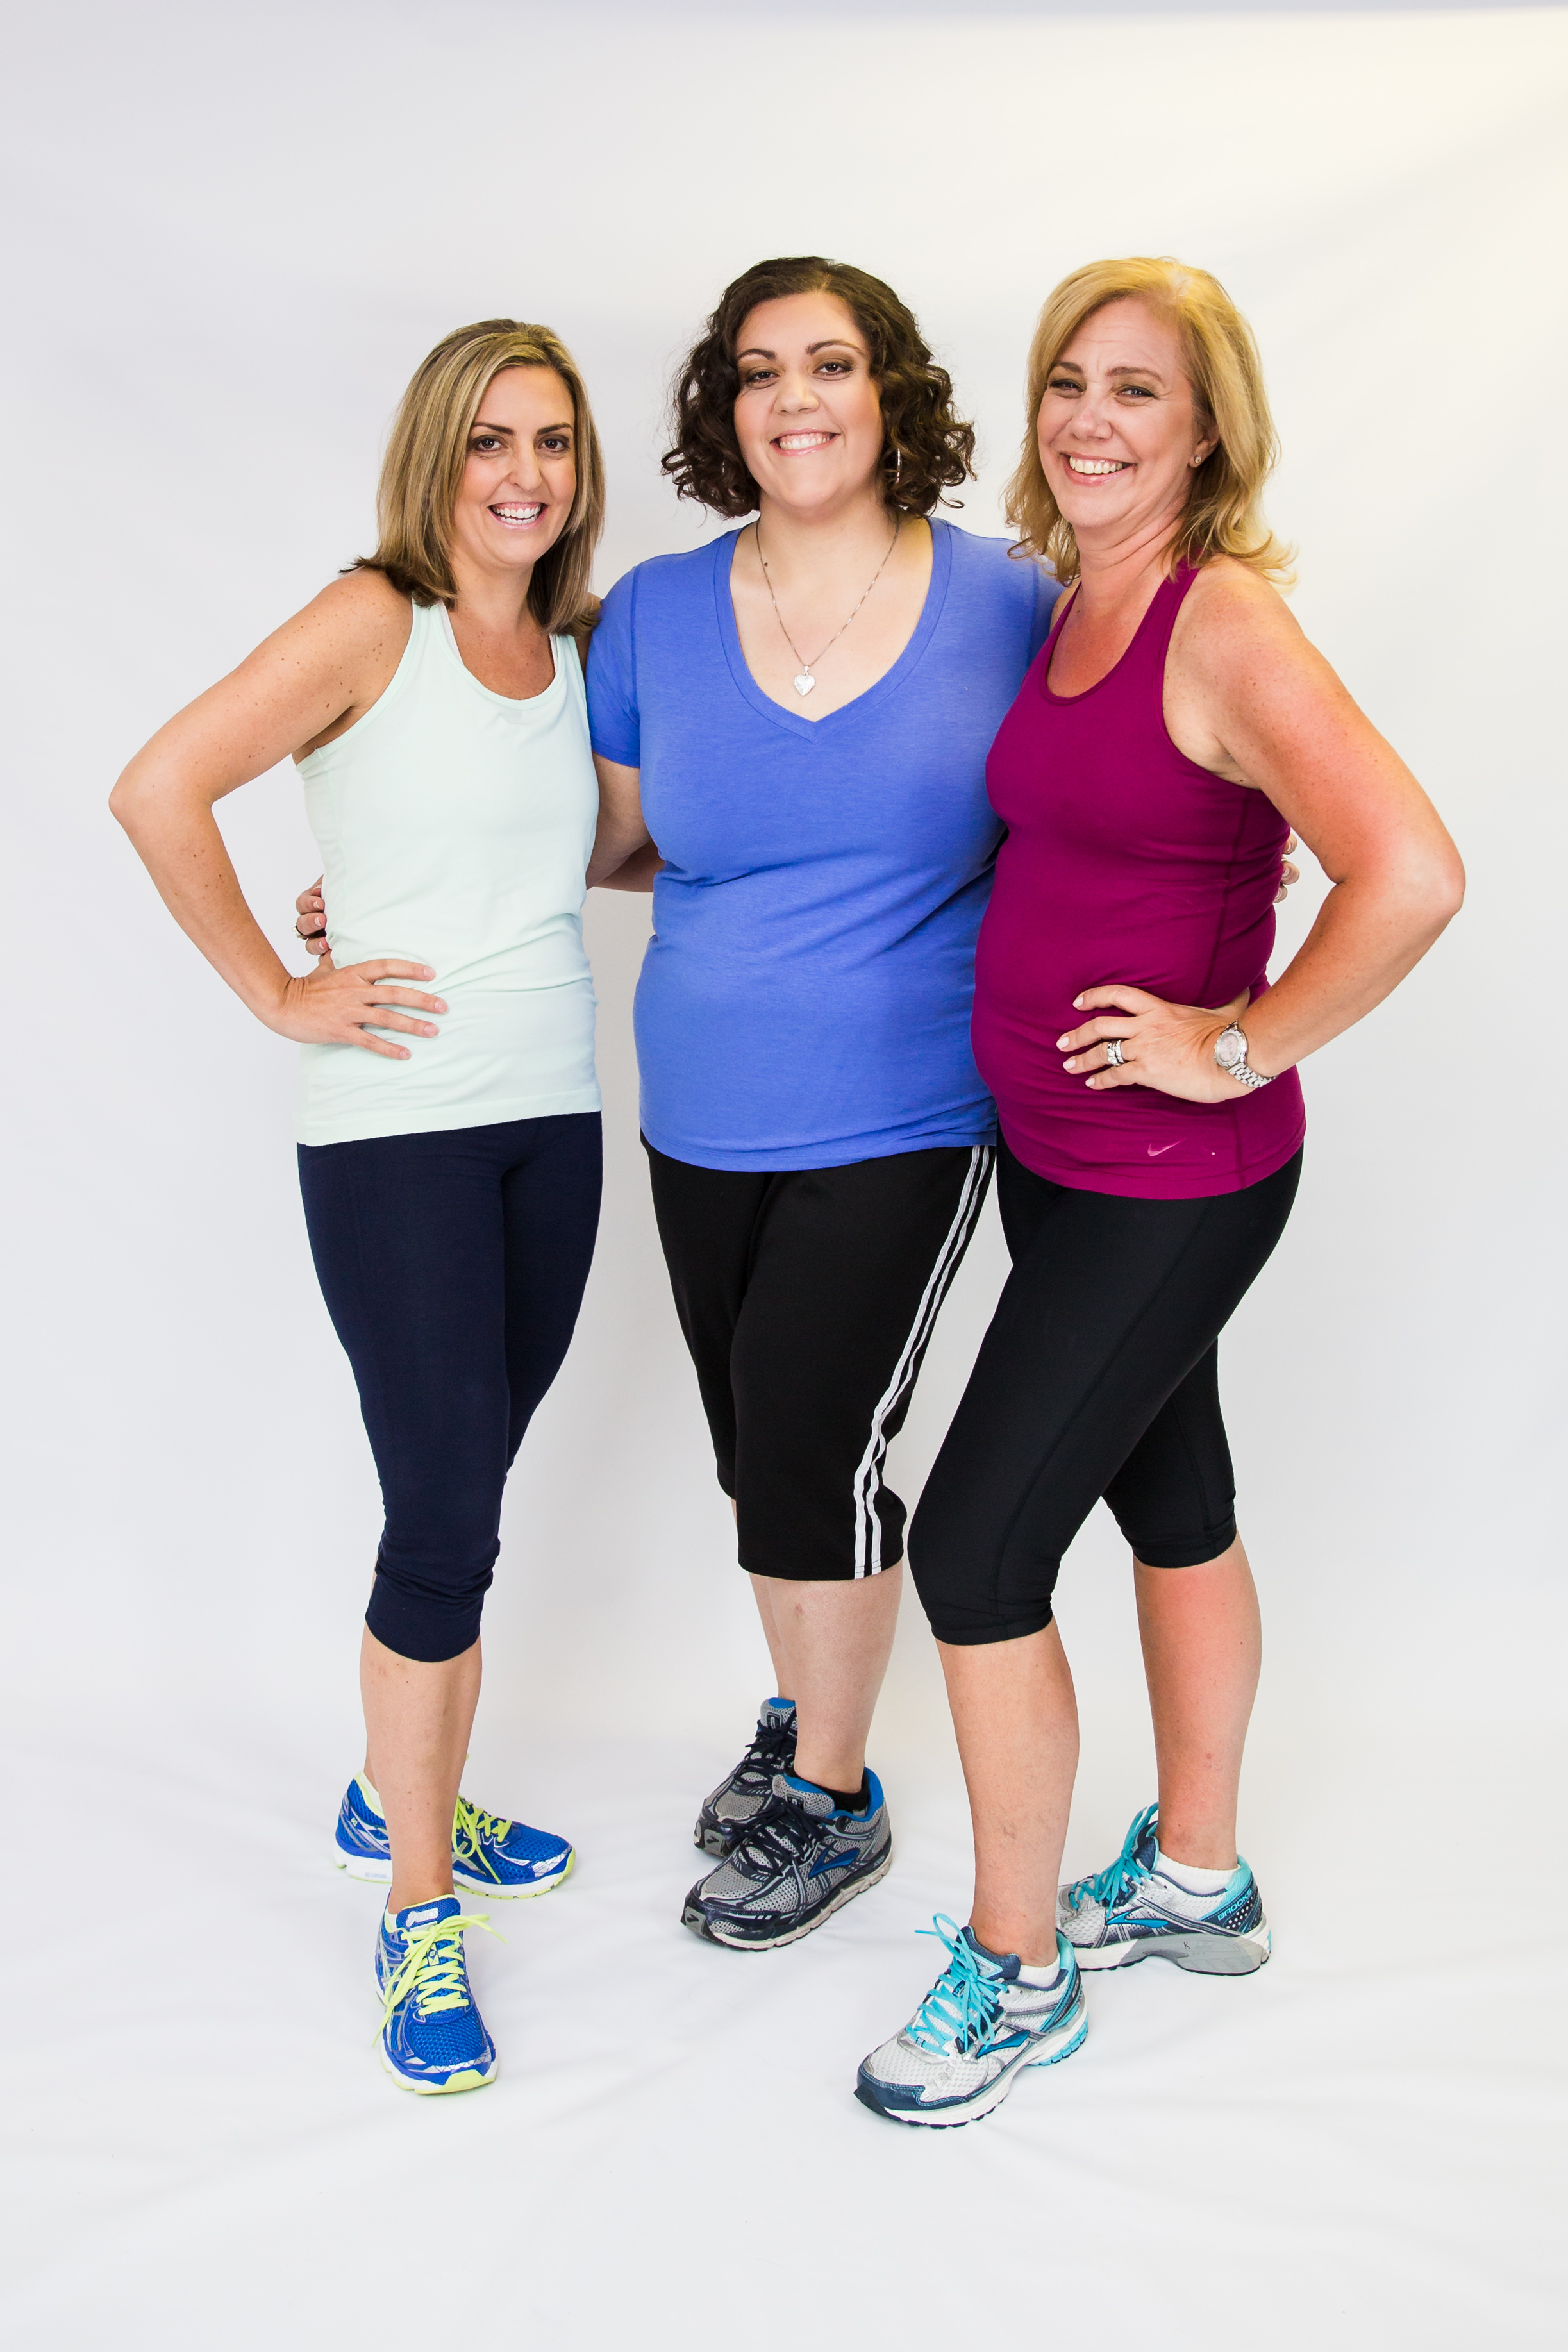 Prime Women — Prime Fitness & Nutrition